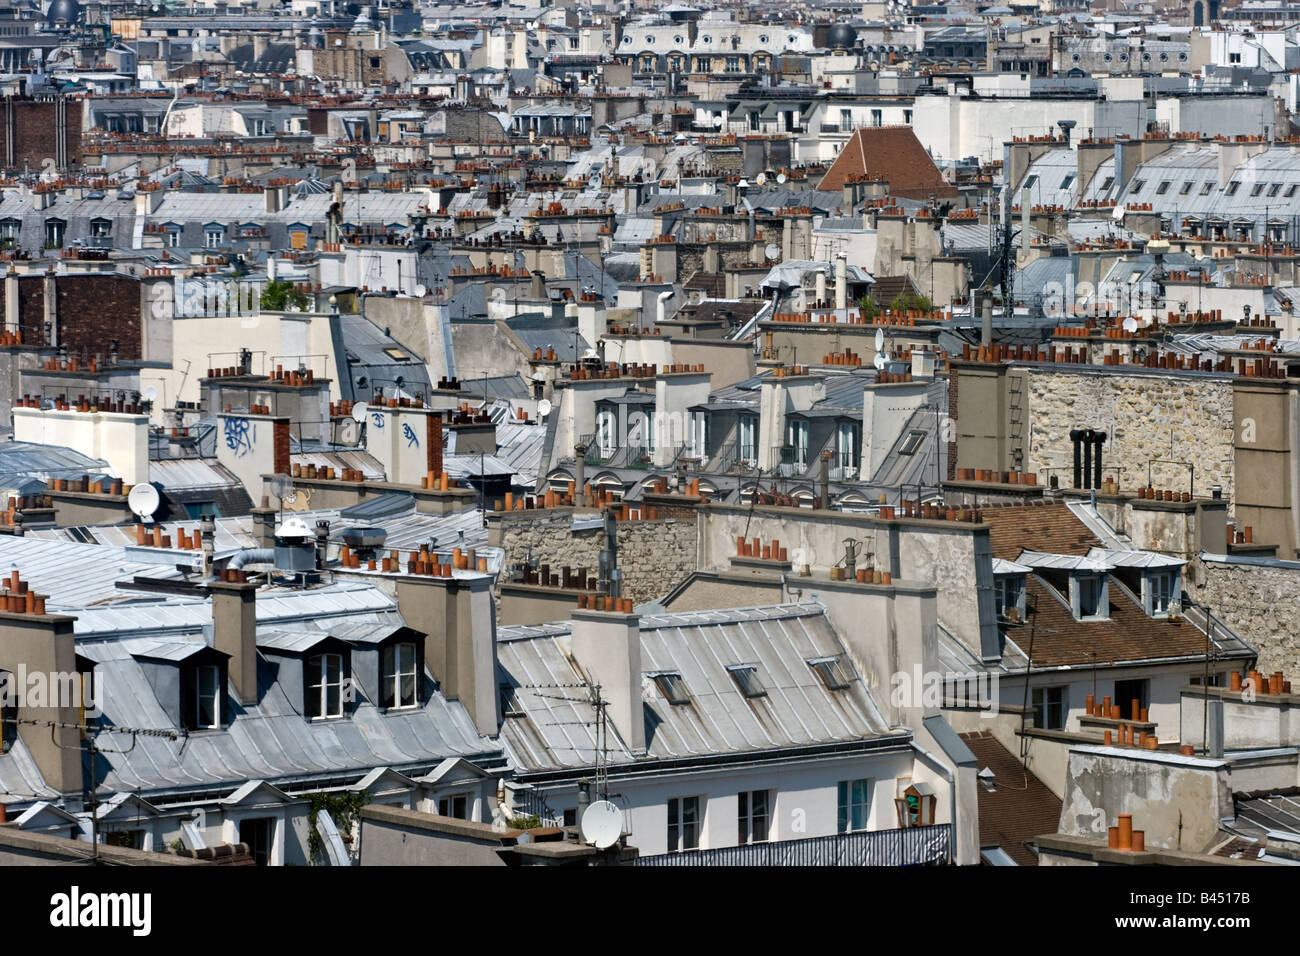 High urban density in central Paris France Stock Photo